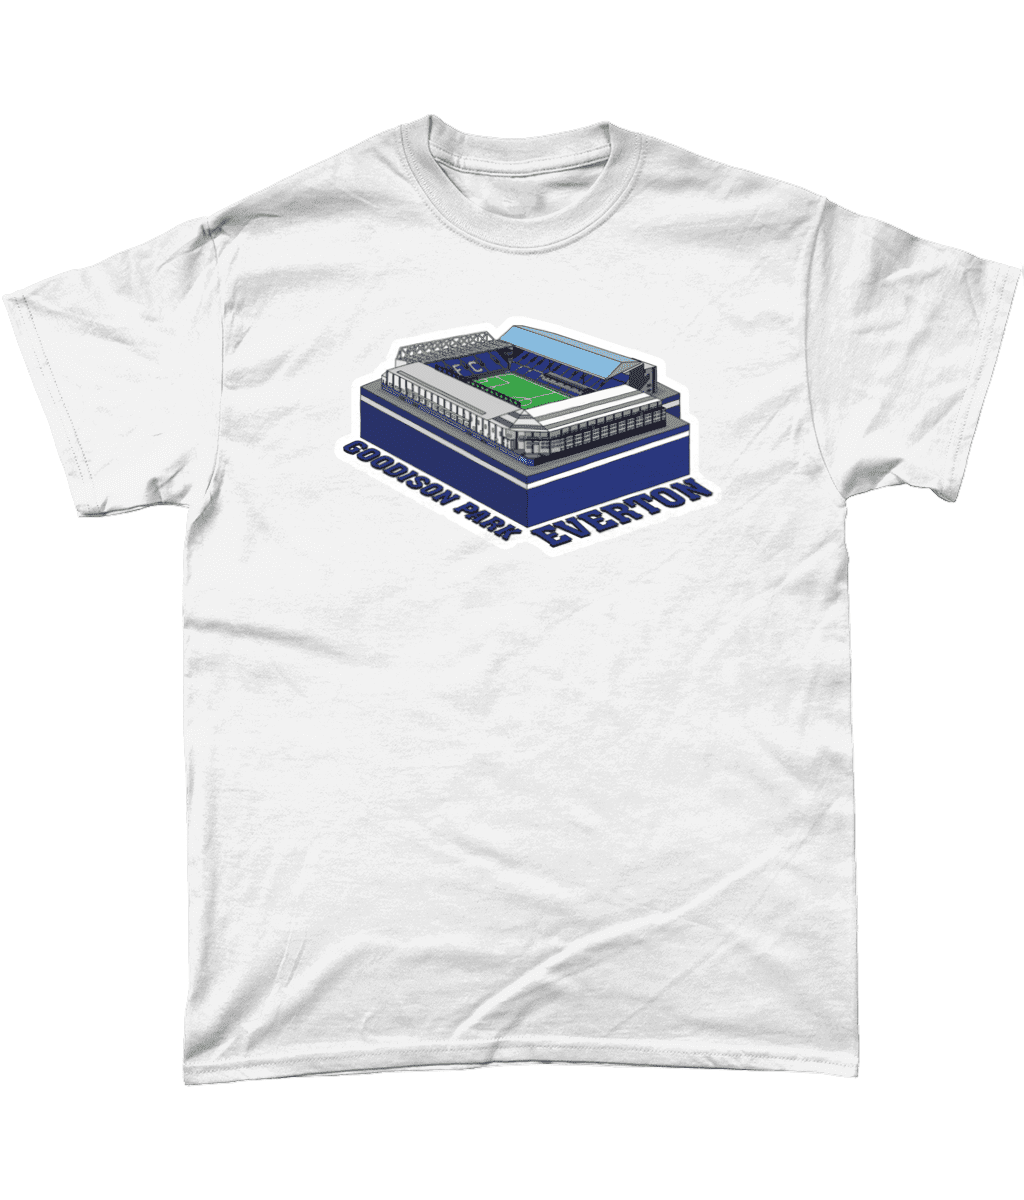 Everton Goodison Park Football Stadium Illustration T Shirt White